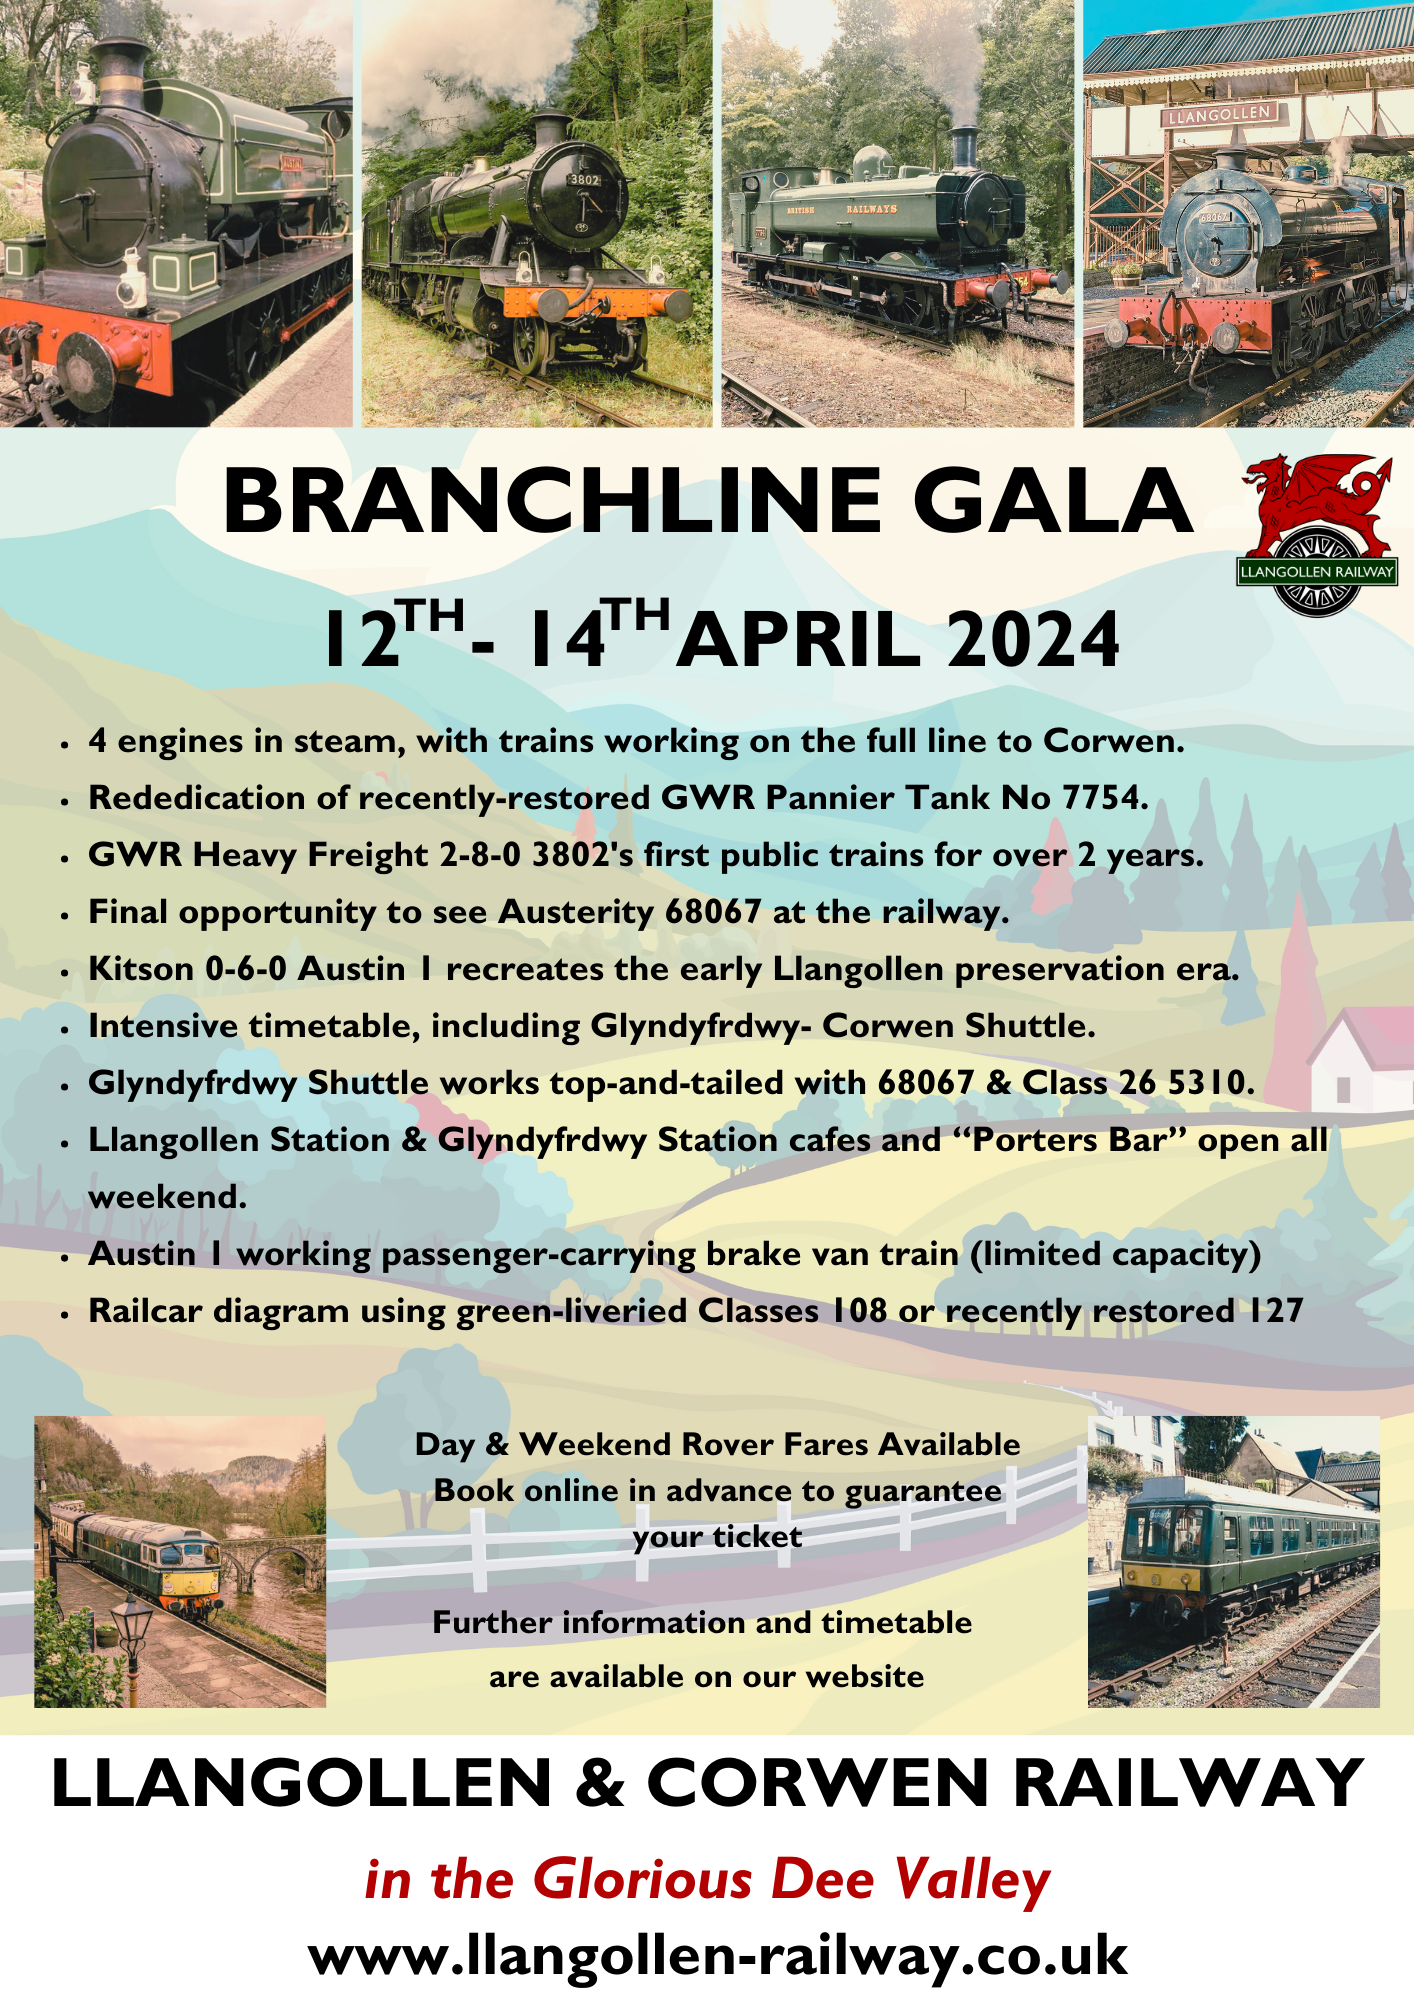 poster advertising the Branchline Gala